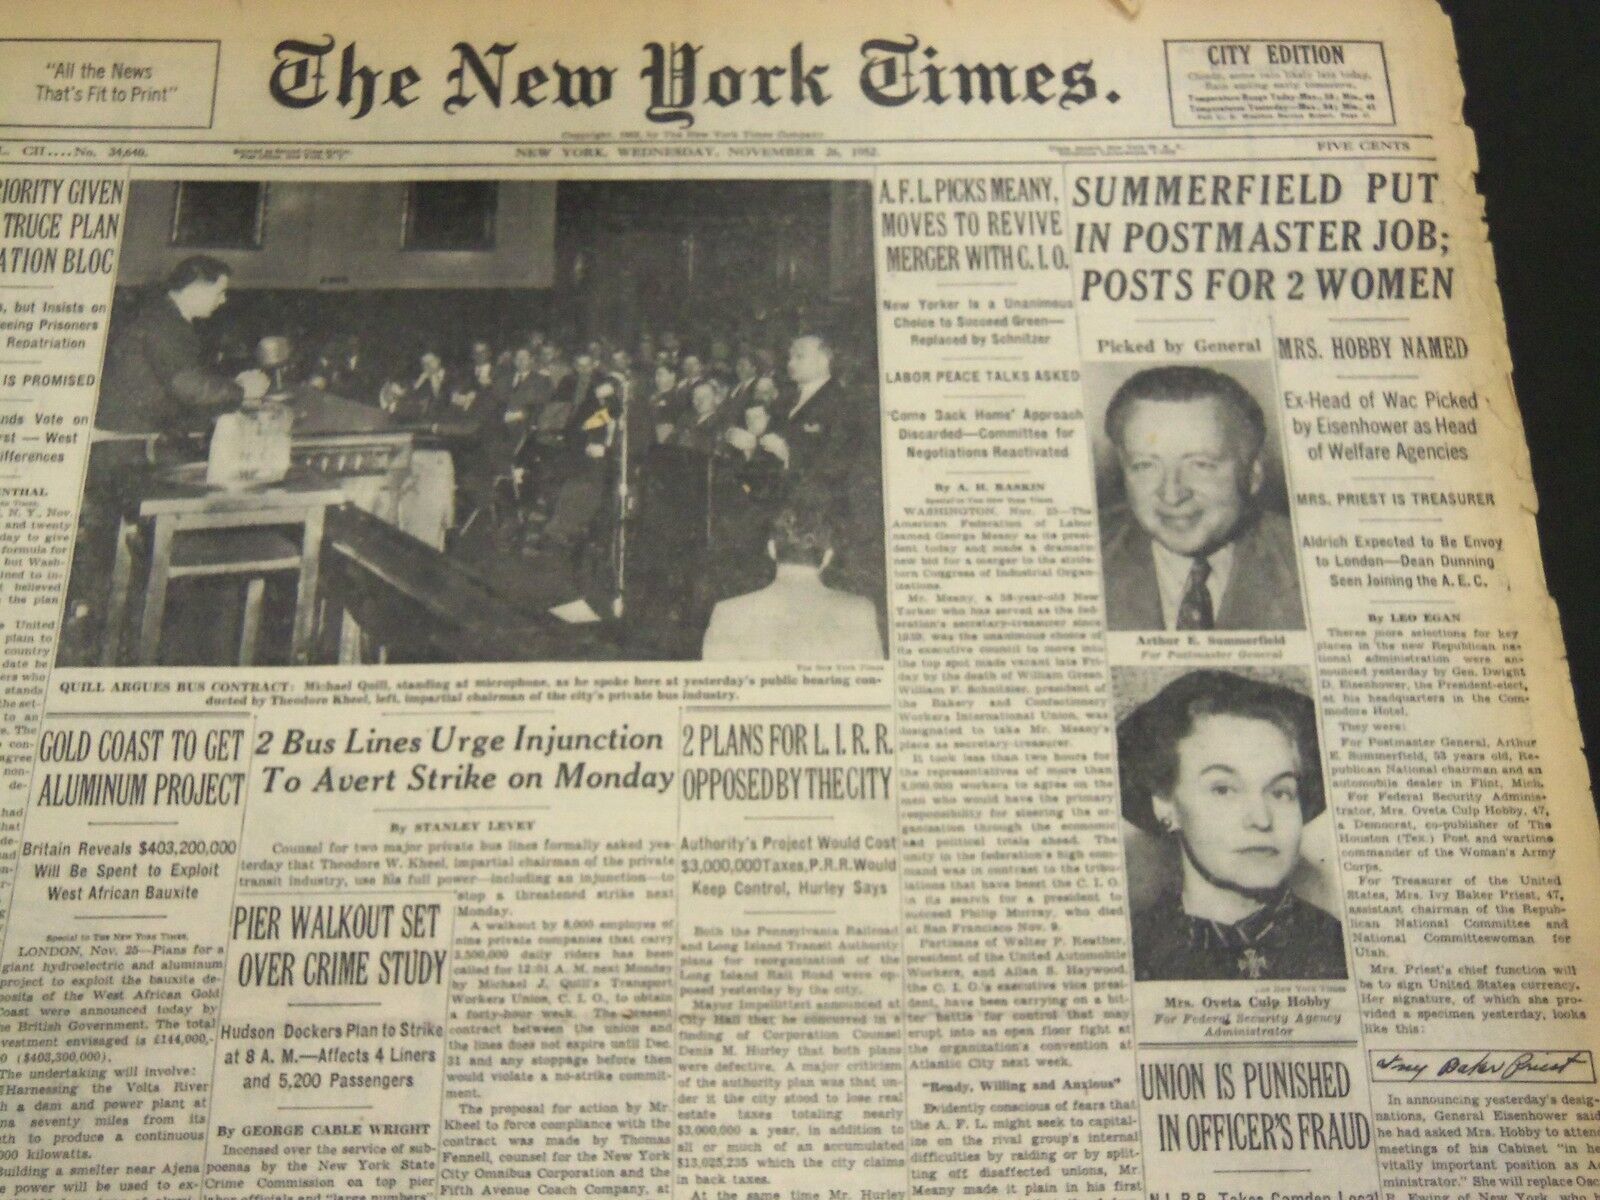 1952 NOV 26 NEW YORK TIMES - SUMMERFIELD PUT IN POSTMASTER JOB - NT 4596